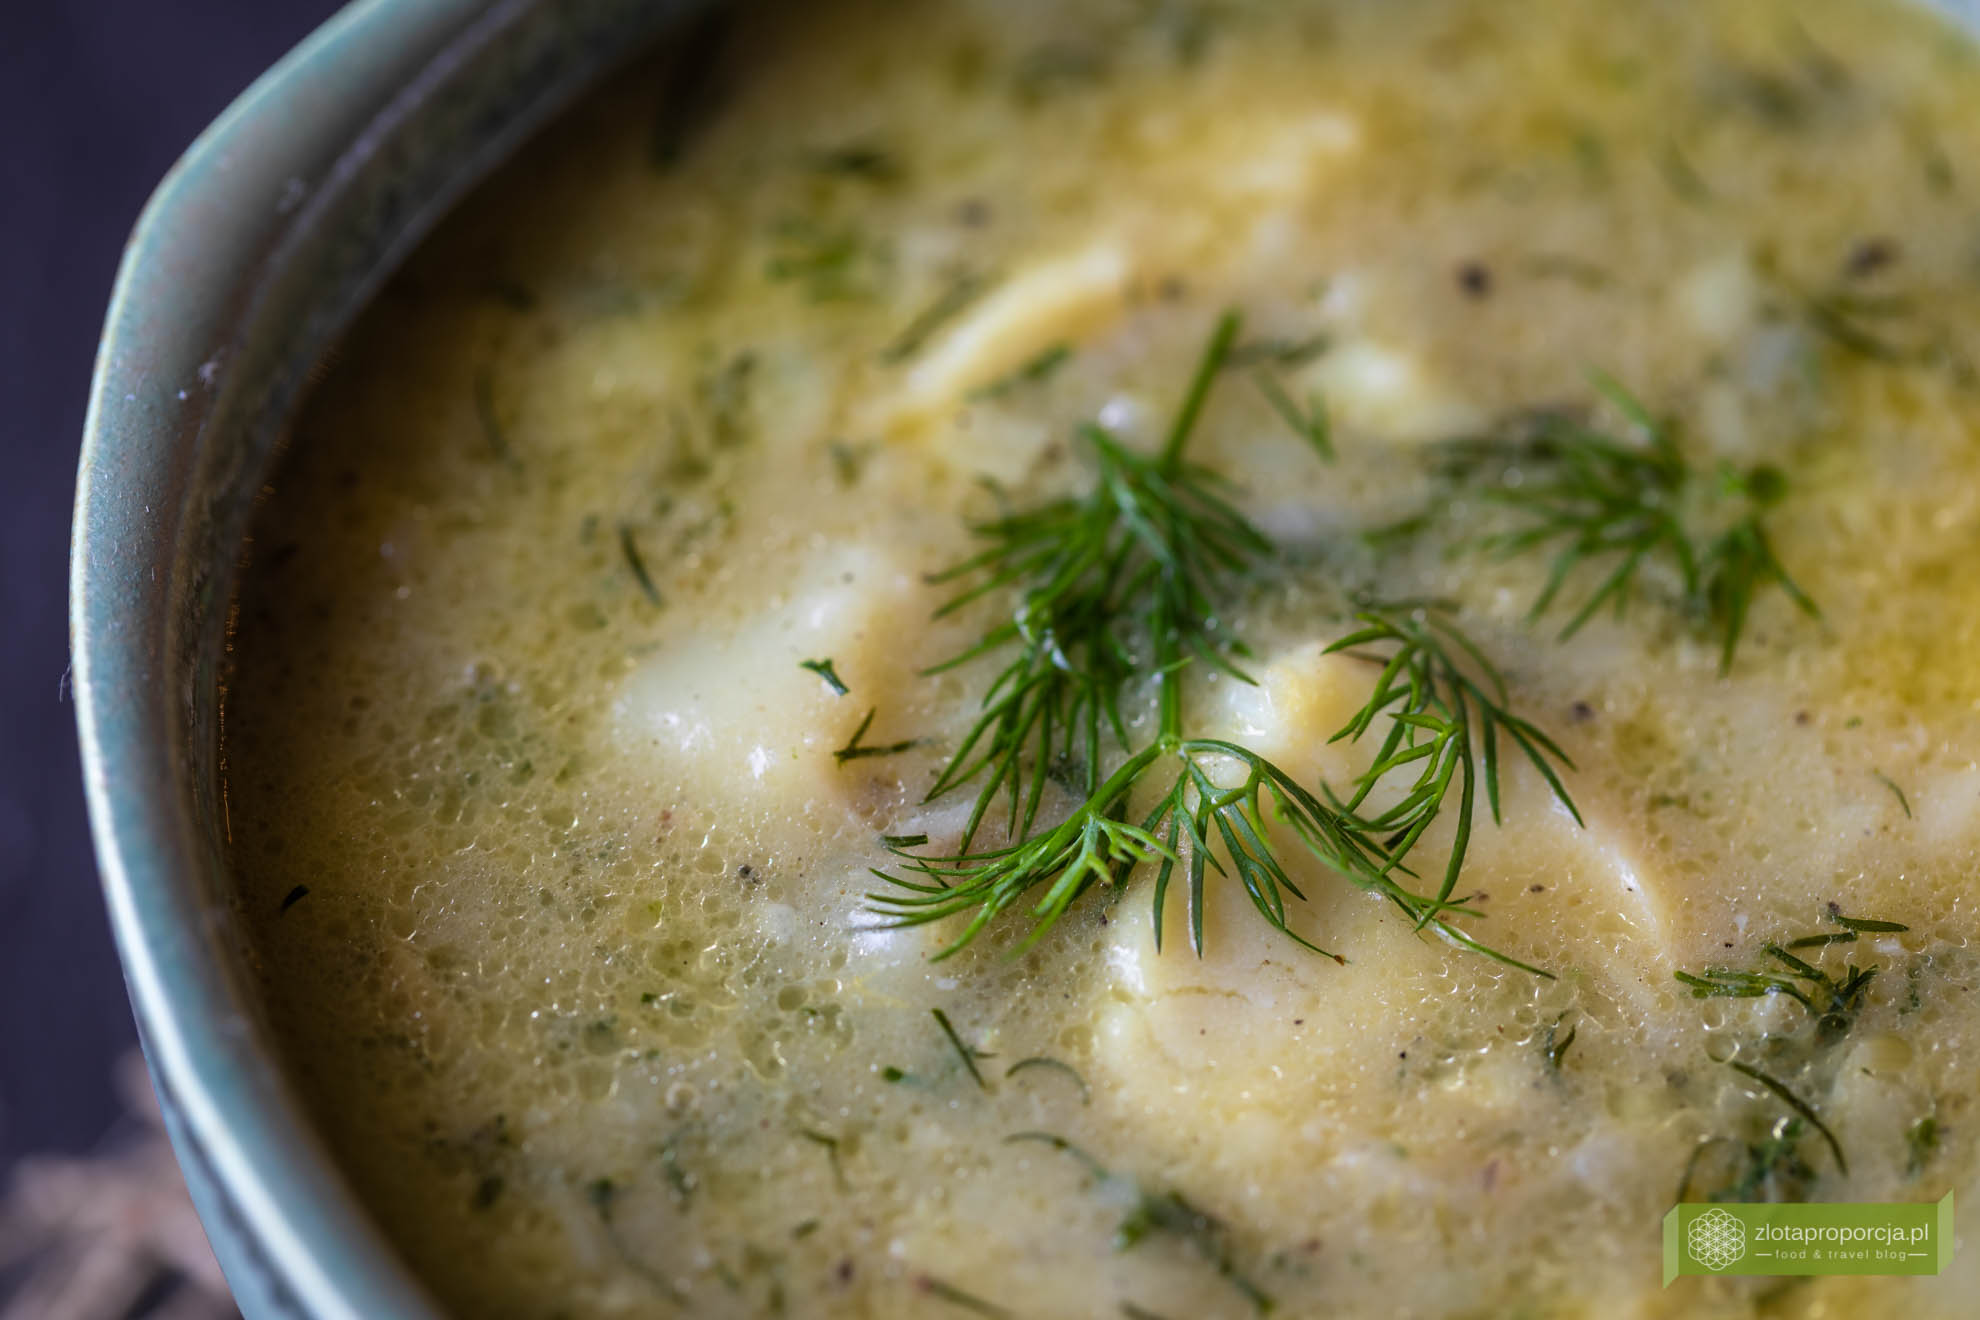 norweska zupa rybna, biedna zupa, kuchnia norweska, rozgrzewająca zupa rybna, zupa rybna z łososiem, zupa rybna z dorszem; 